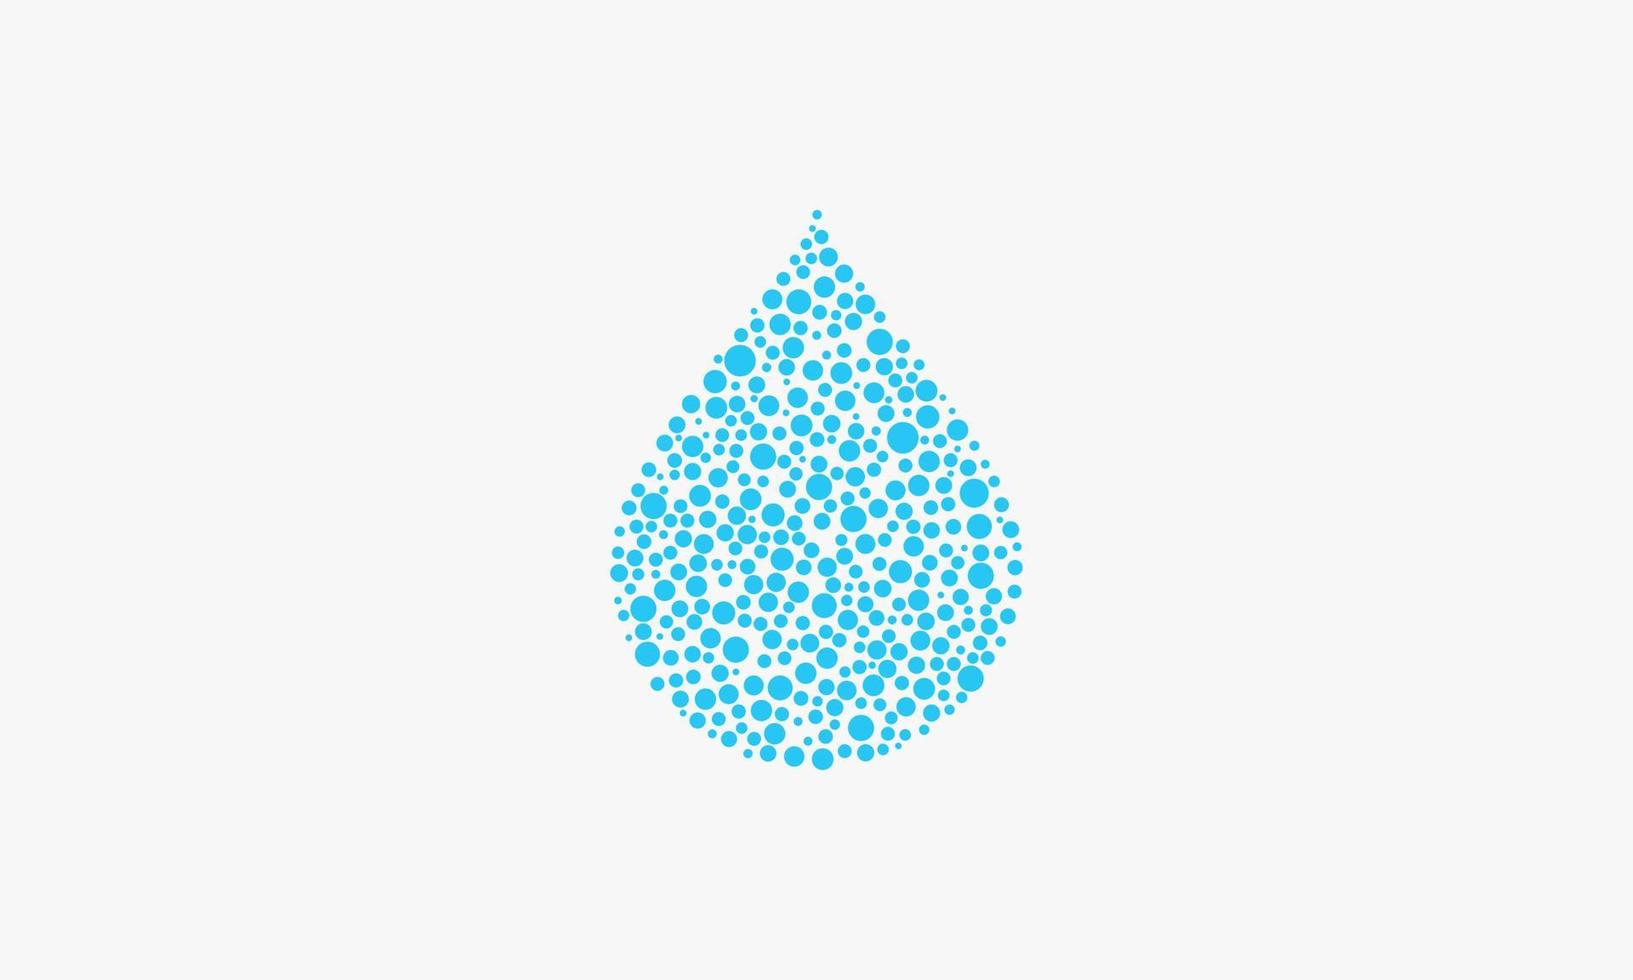 gota de agua punteada de burbuja. vector de diseño gráfico.